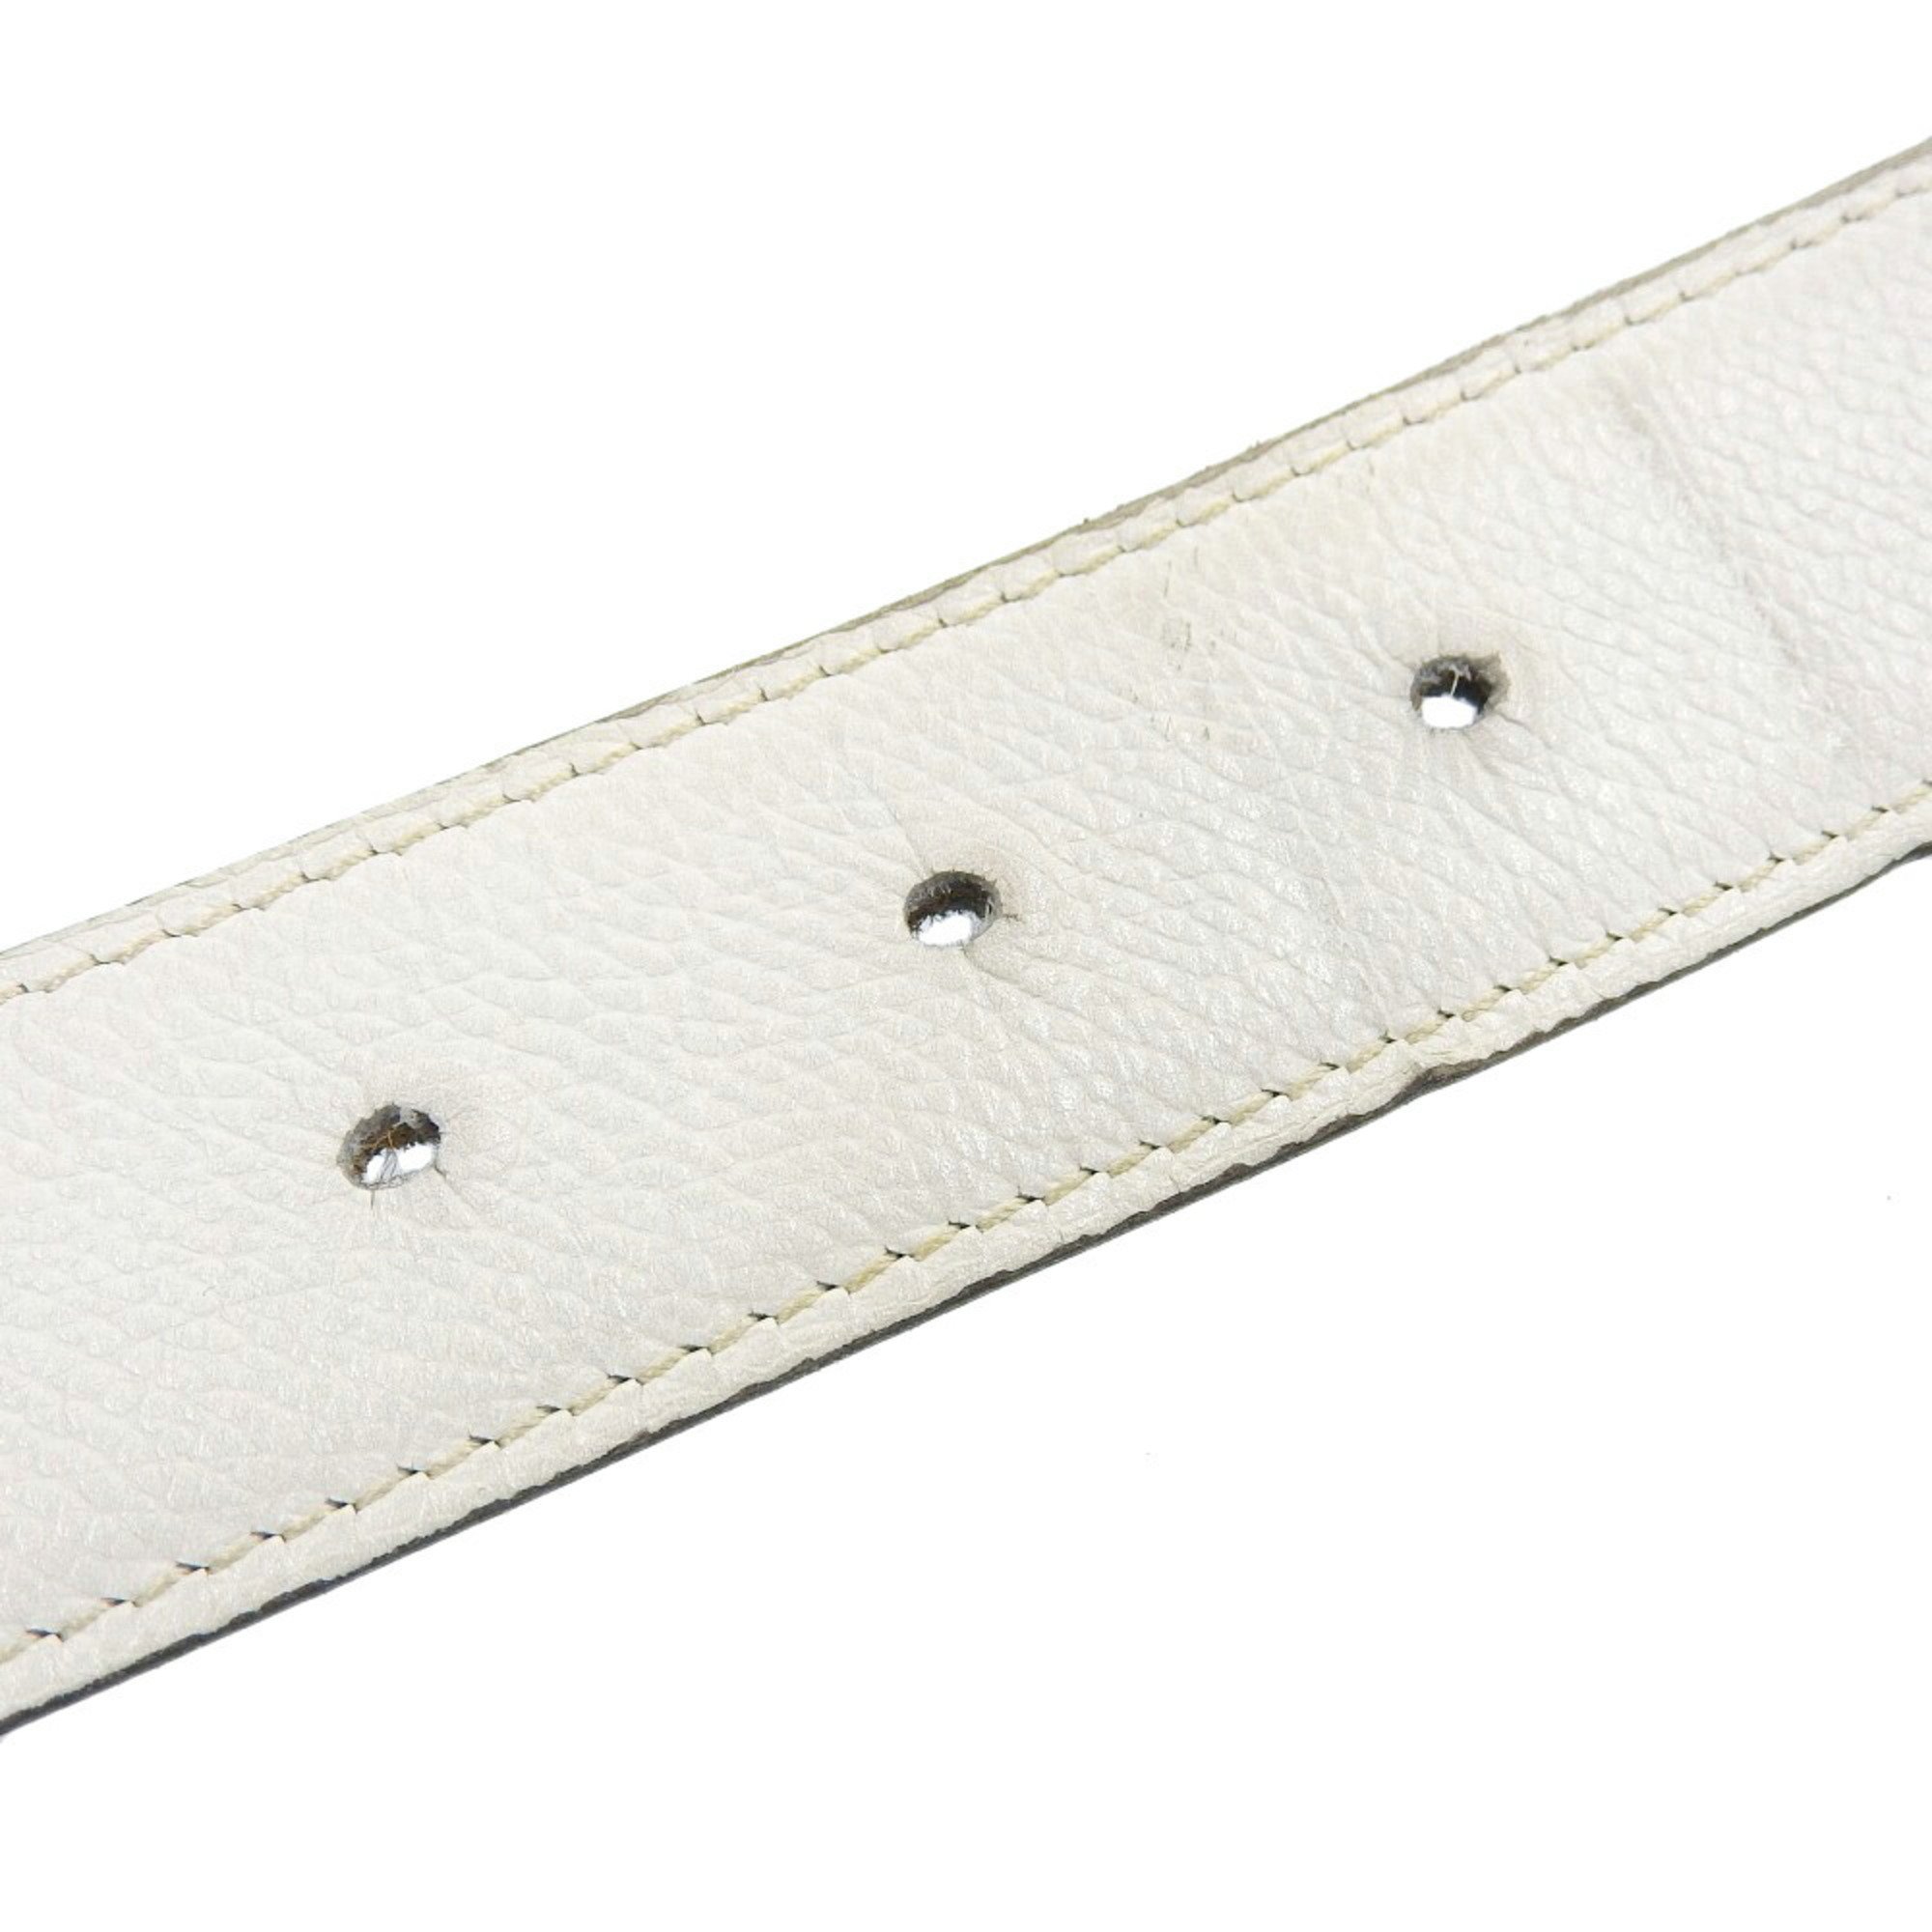 Hermes Evelyn Perforated Reversible Belt □J Engraved 95 Waist Leather Black White